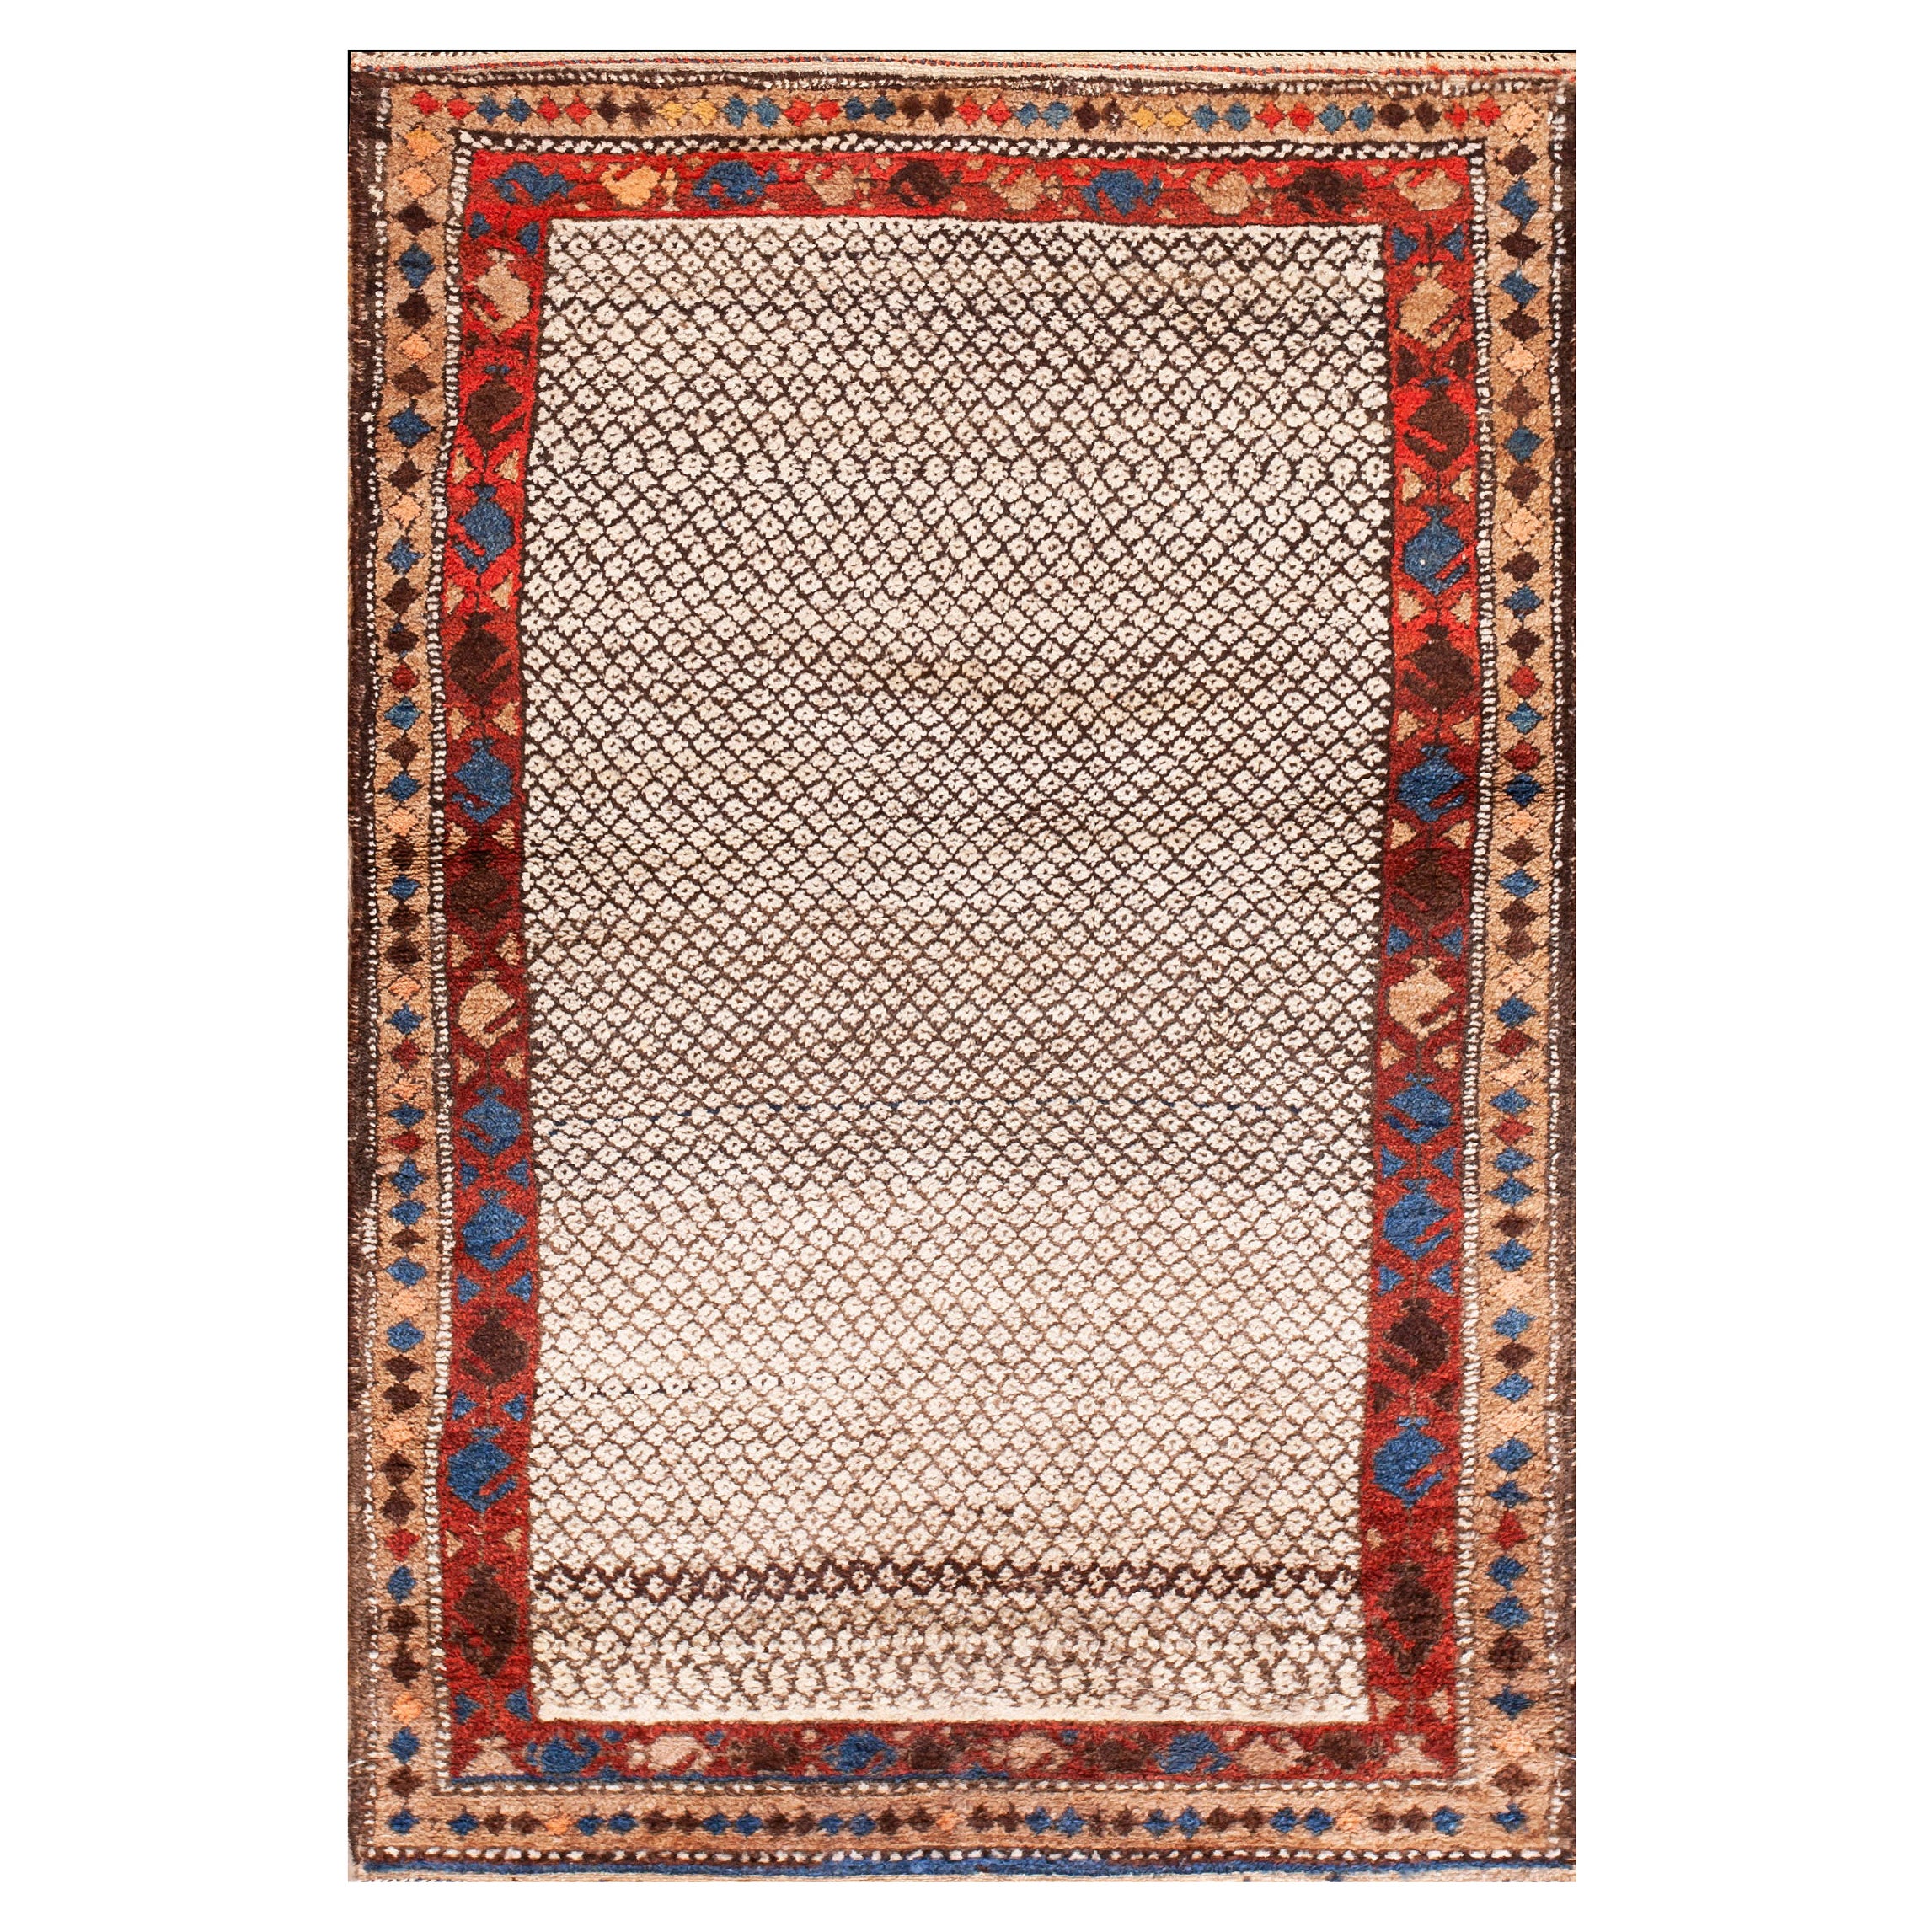 Antique NW Persian Rug  ( 3' 4" x 5' - 102 x 153 cm)